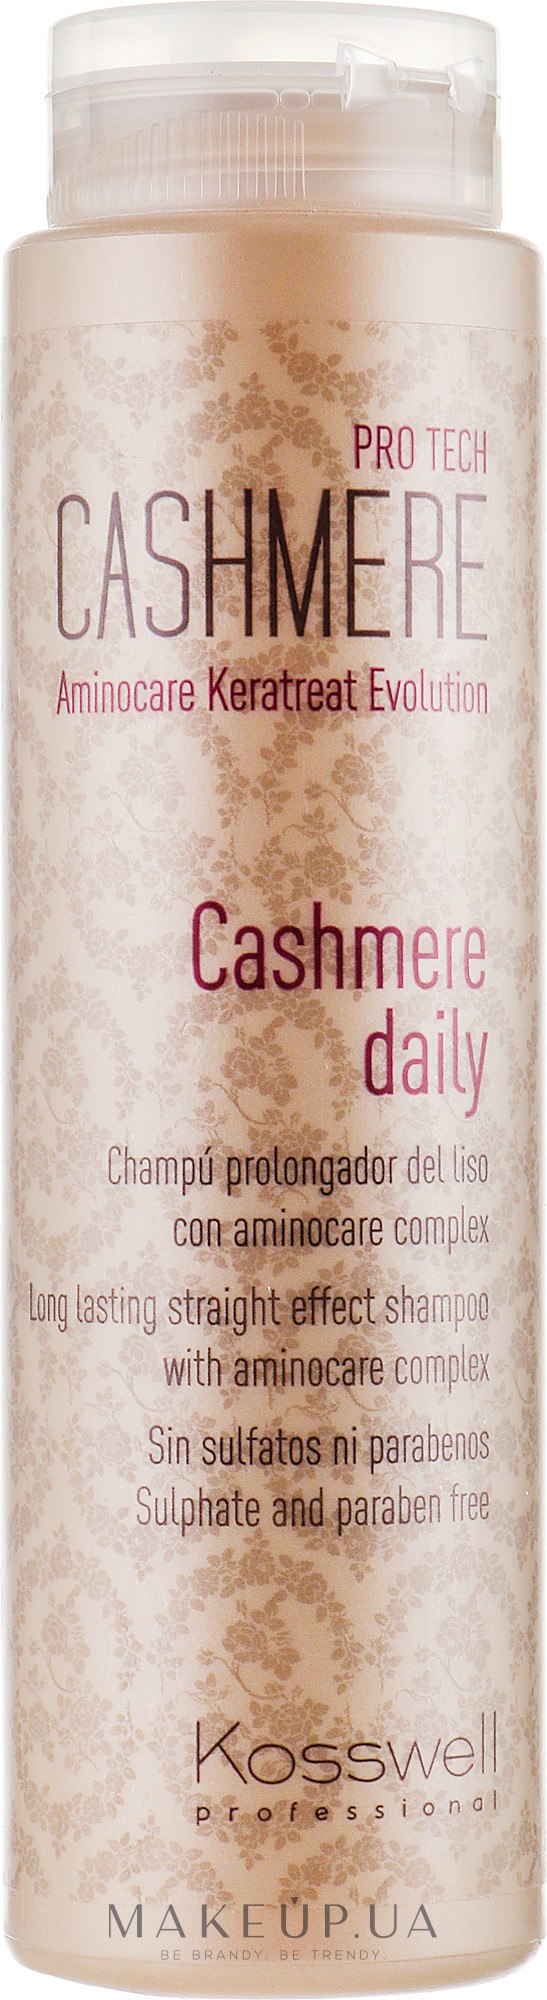 Шампунь для поддержания гладкости волос - Kosswell Professional Cashmere Daily  — фото 250ml